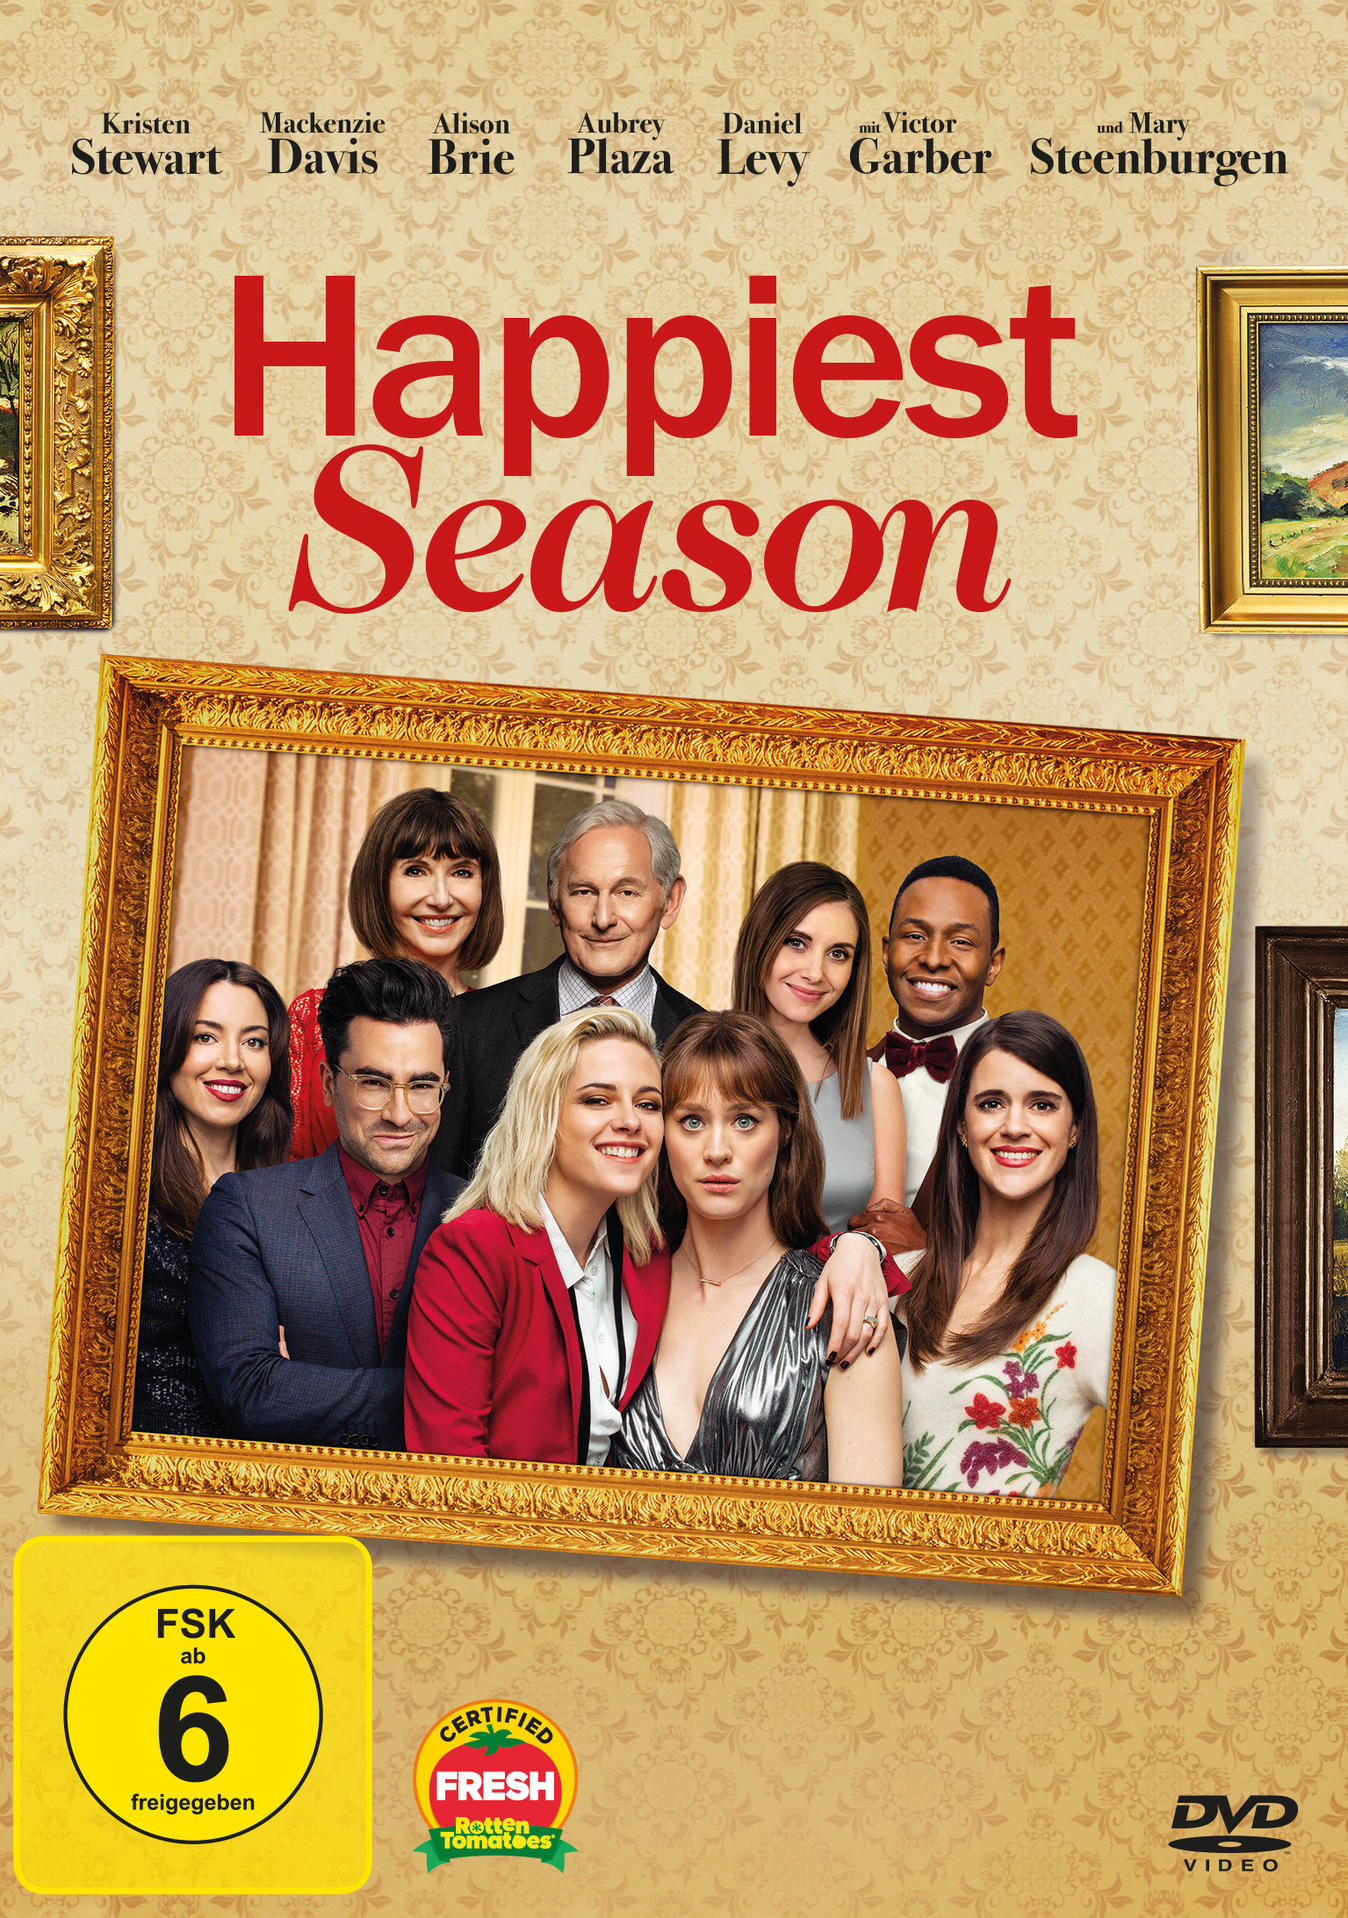 Season DVD Happiest